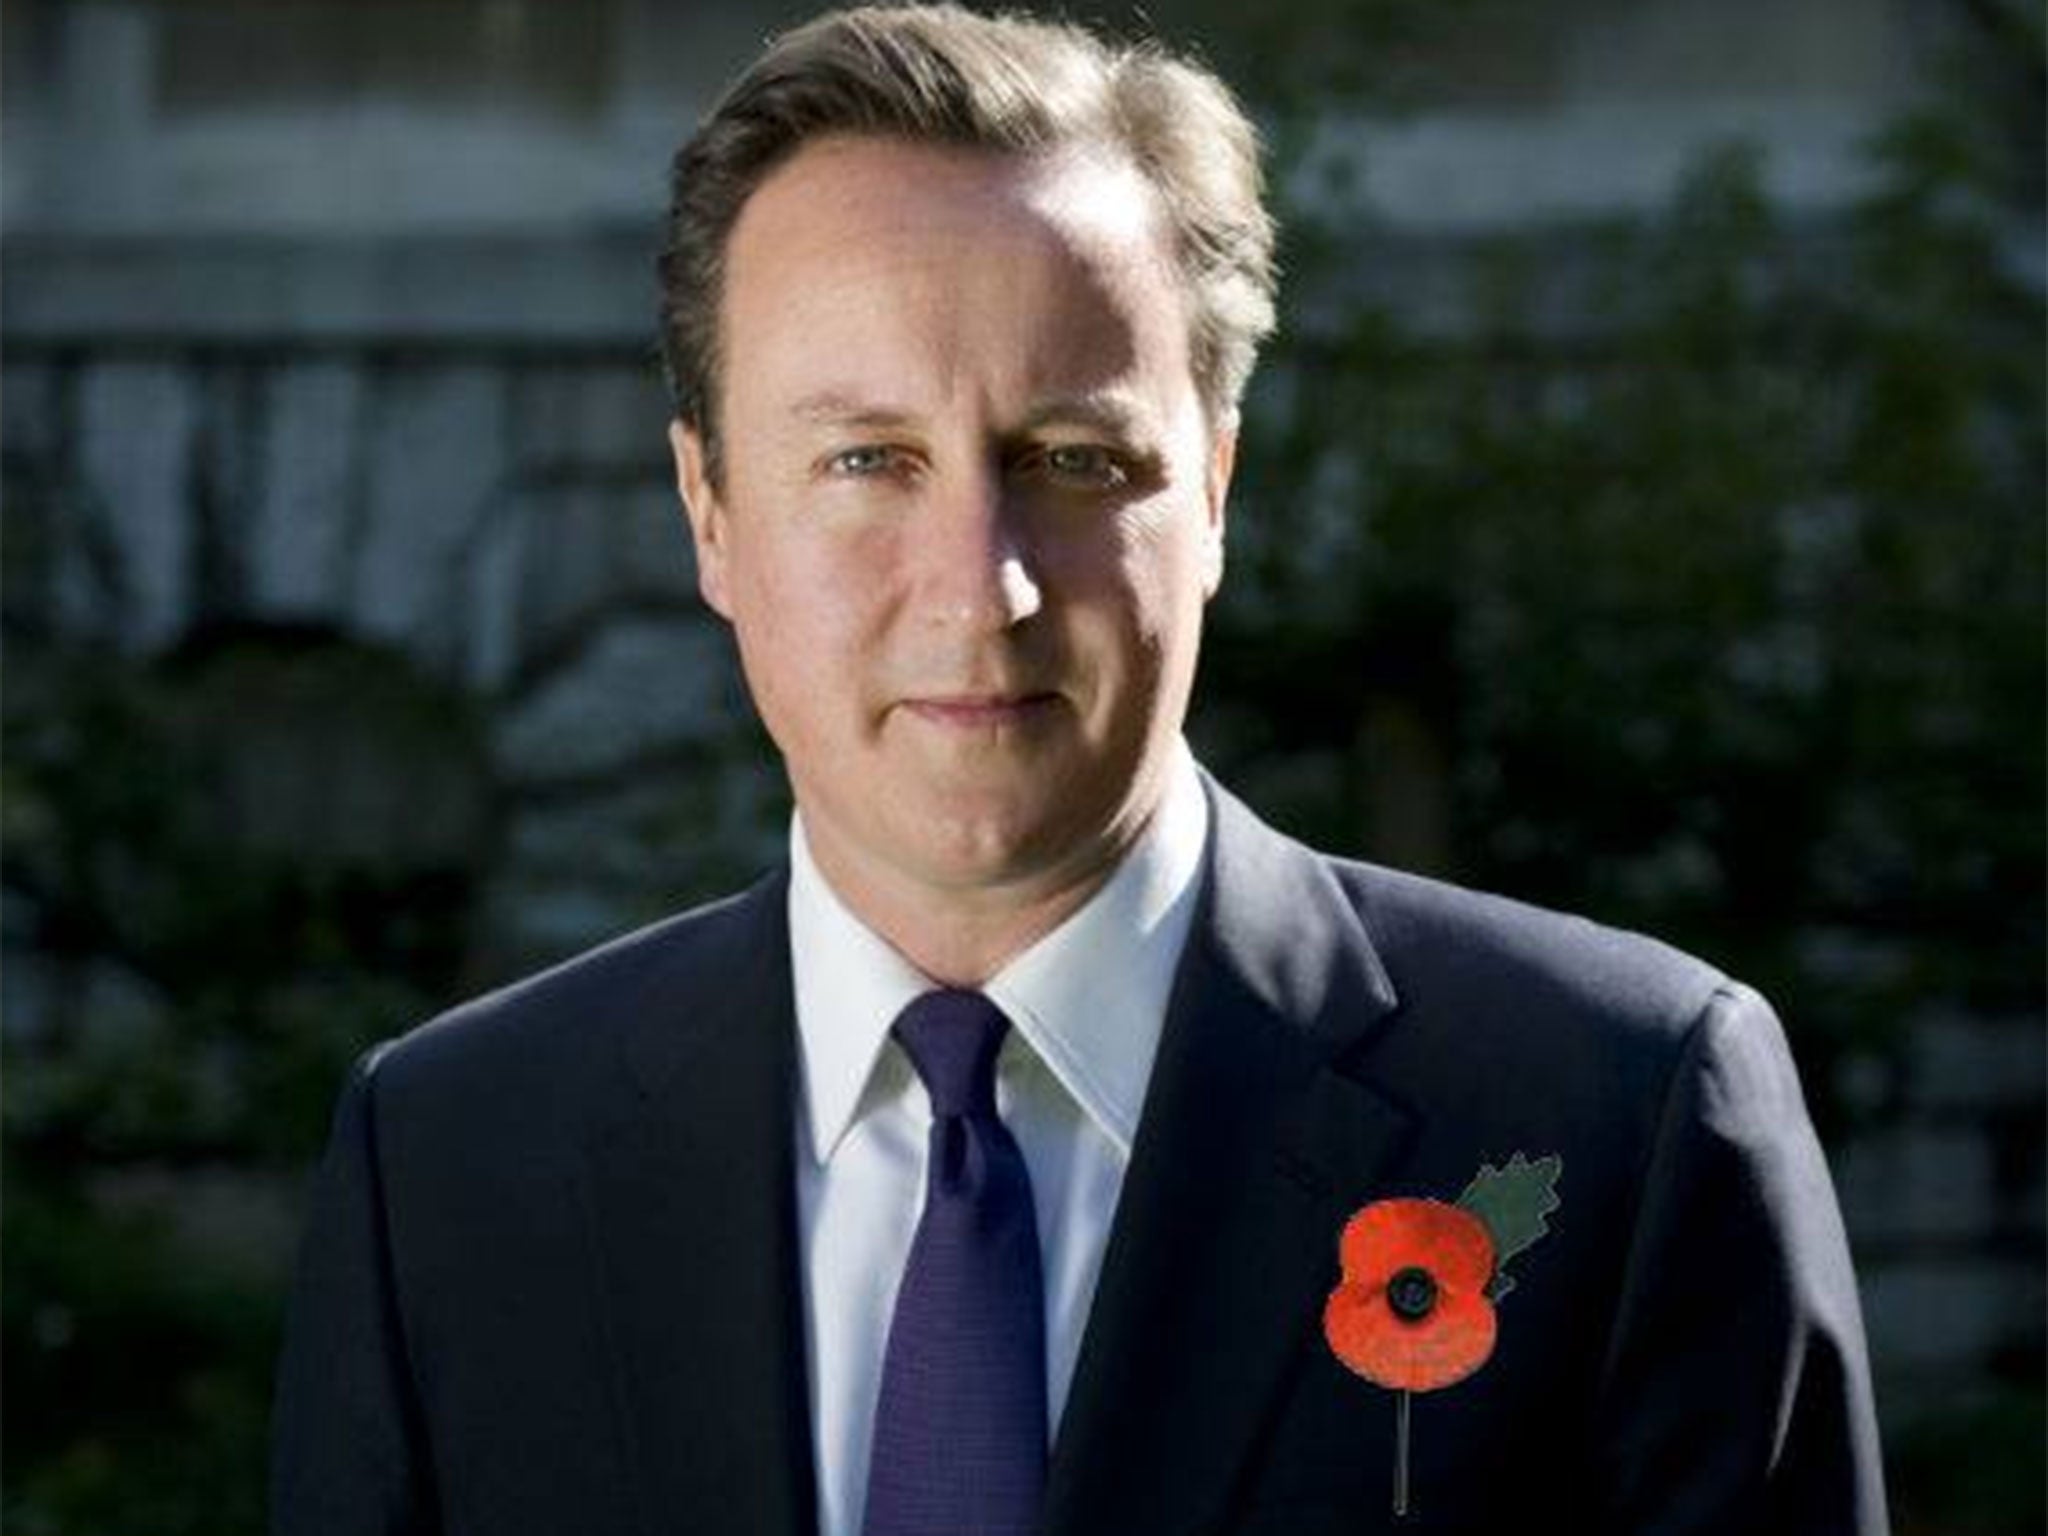 David Cameron with the photoshopped poppy